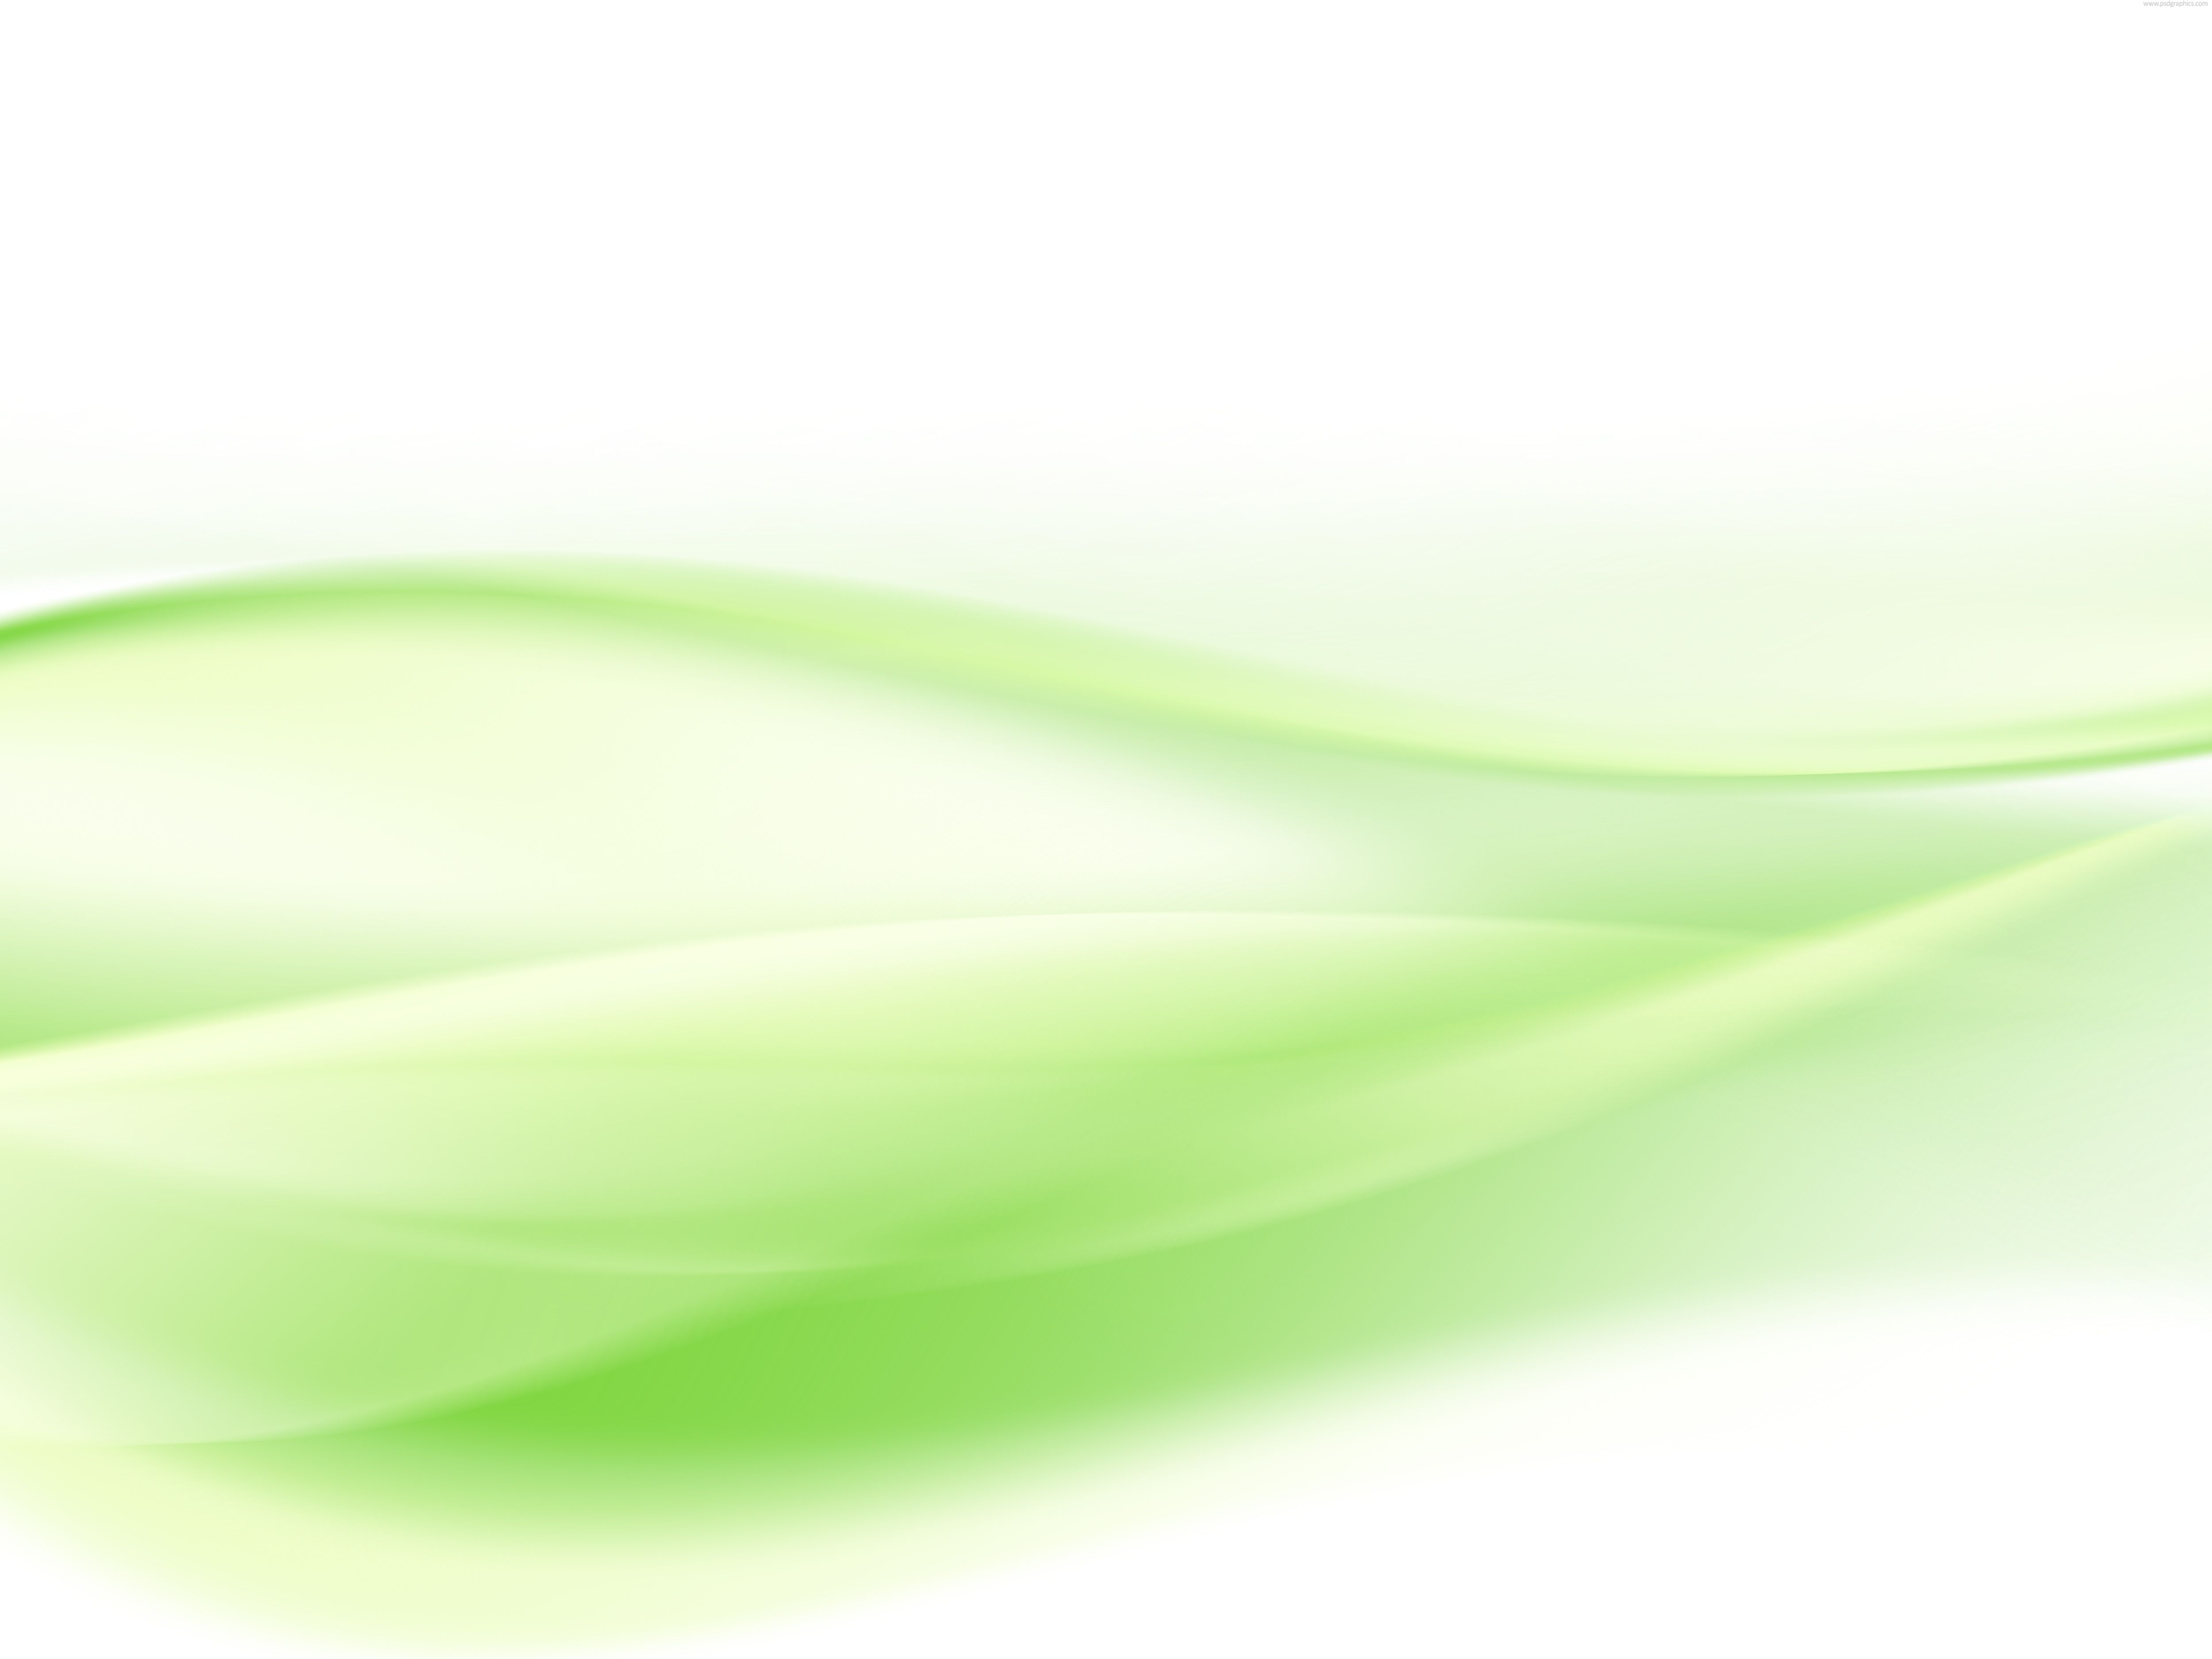 Free green background design images Download - Light Green Waves ...